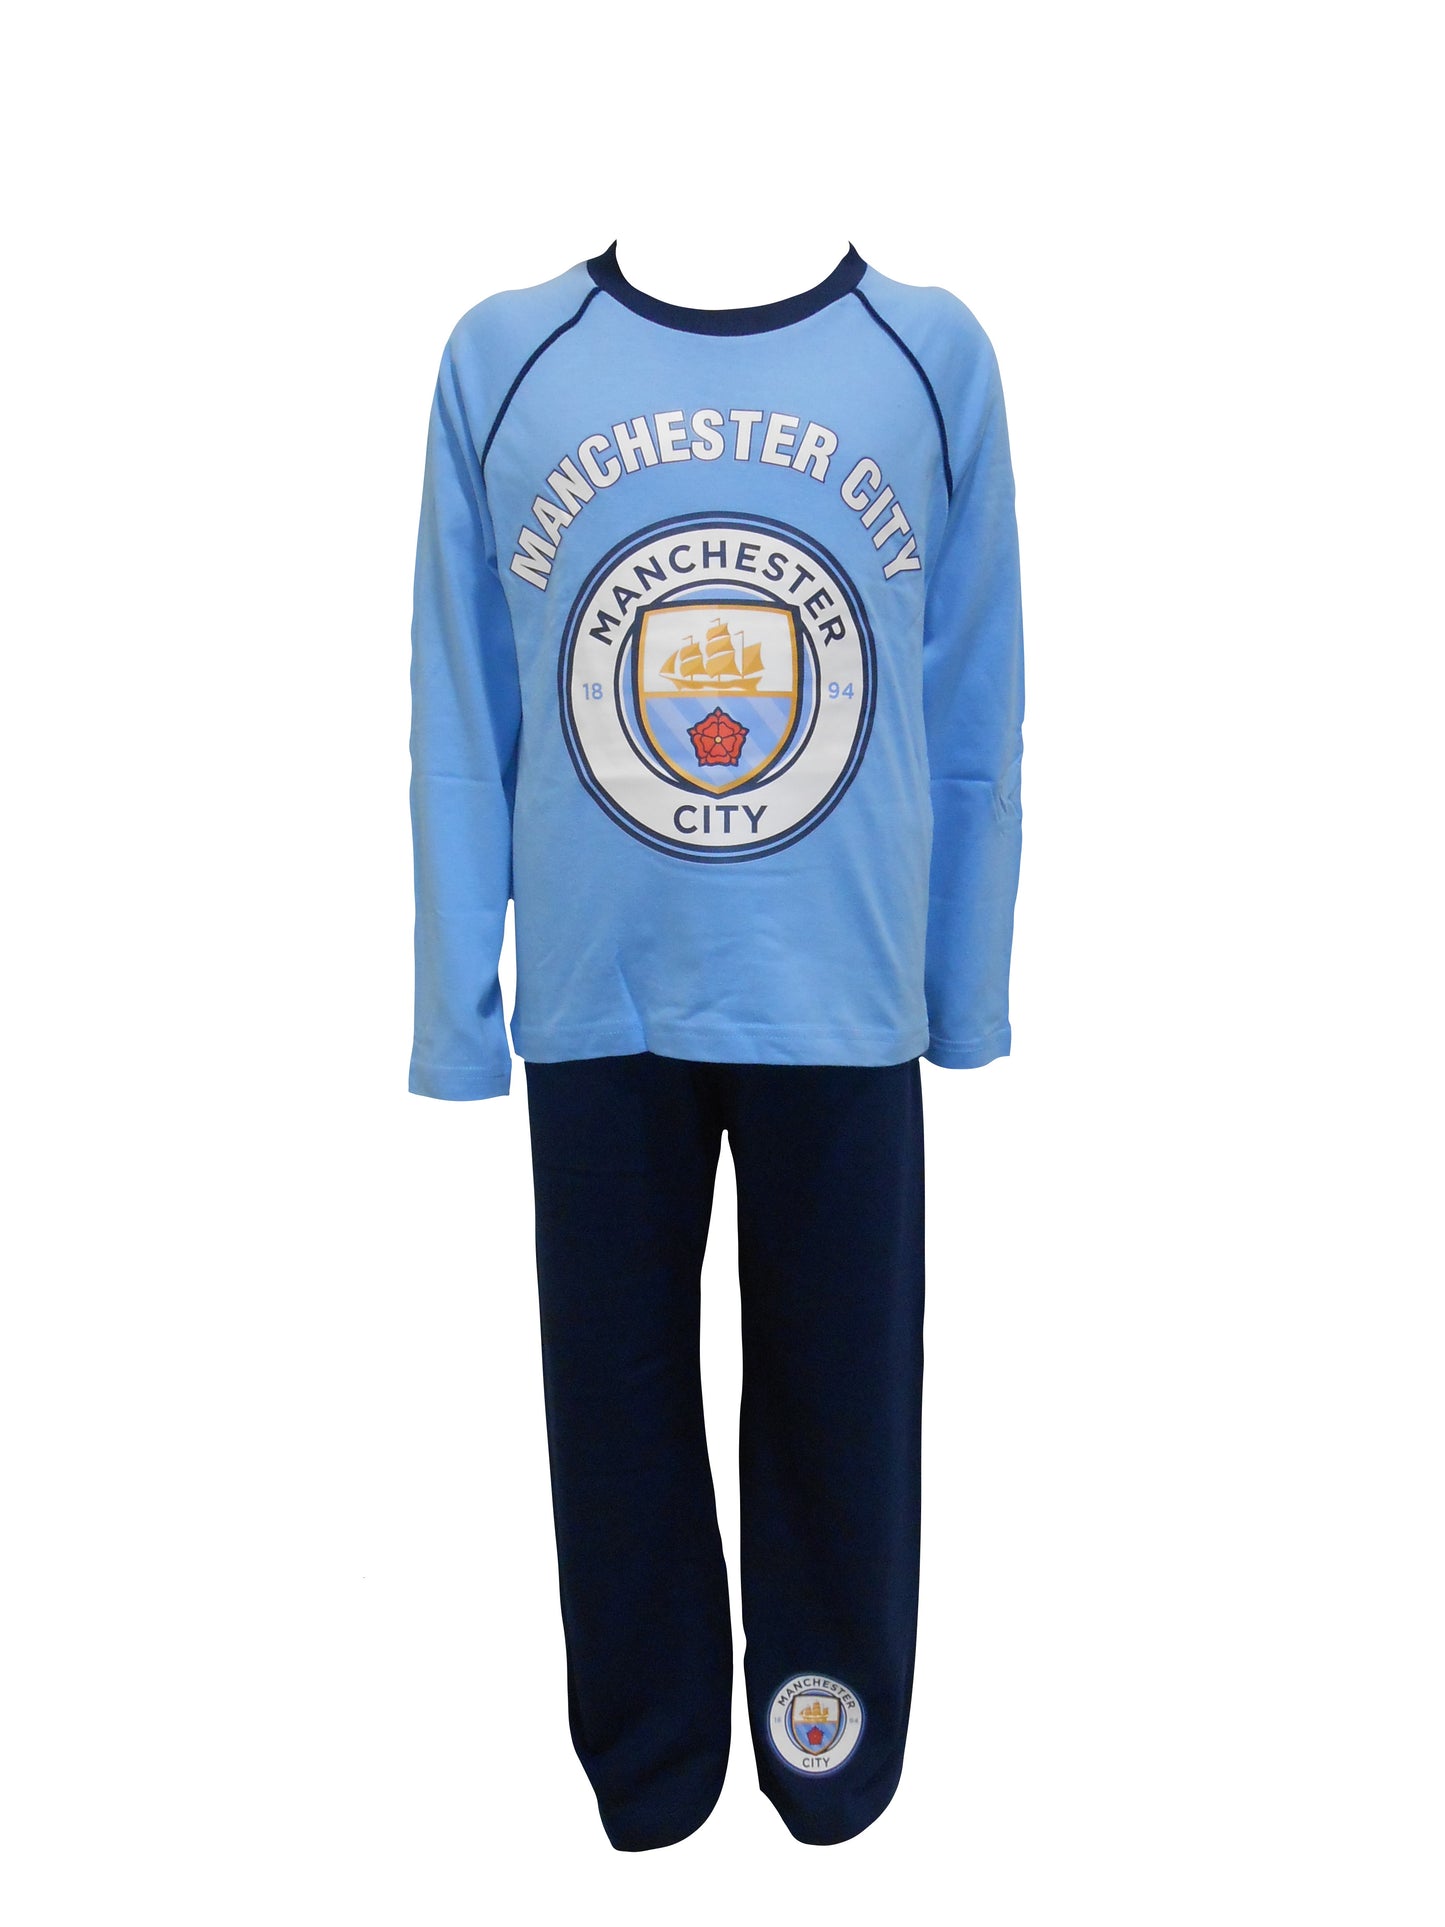 Manchester City Football Club Boys Pyjamas